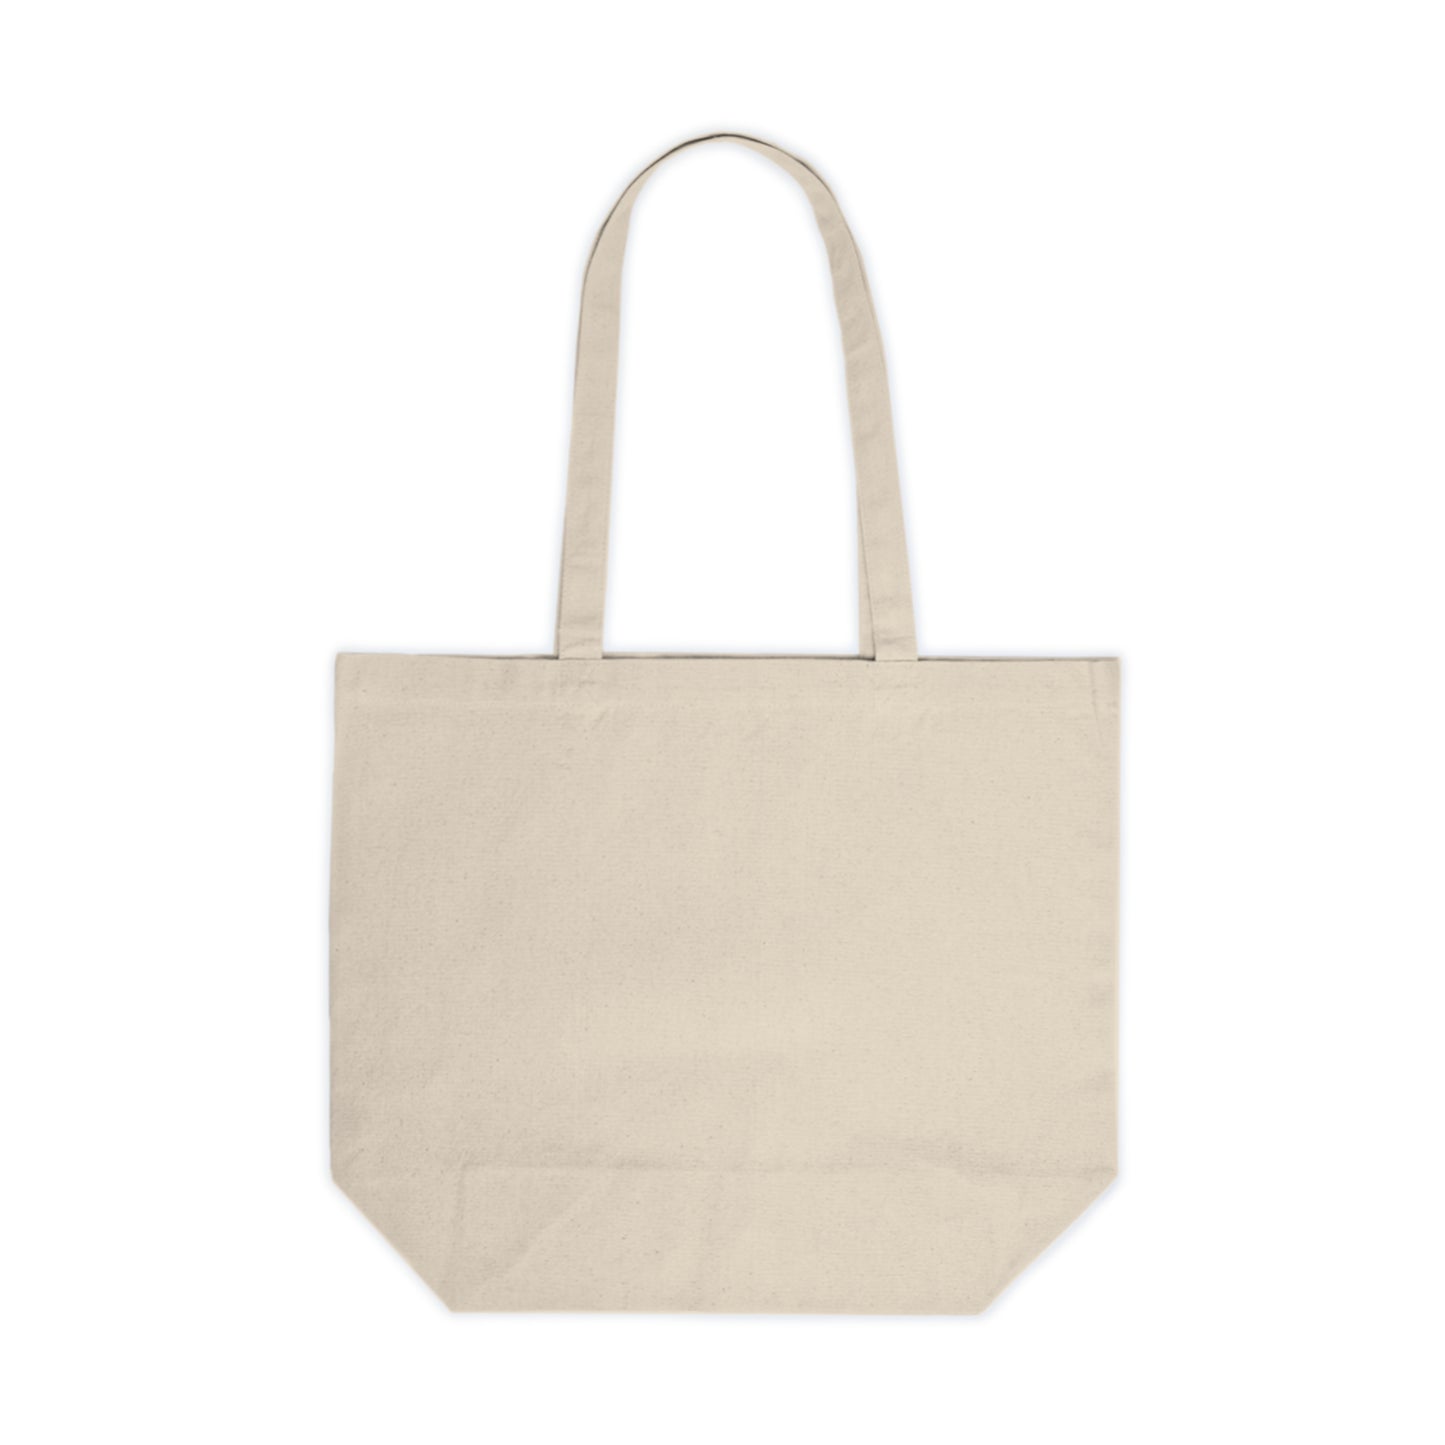 DIHLXW'Y - MY BAG, Canvas Shopping Tote